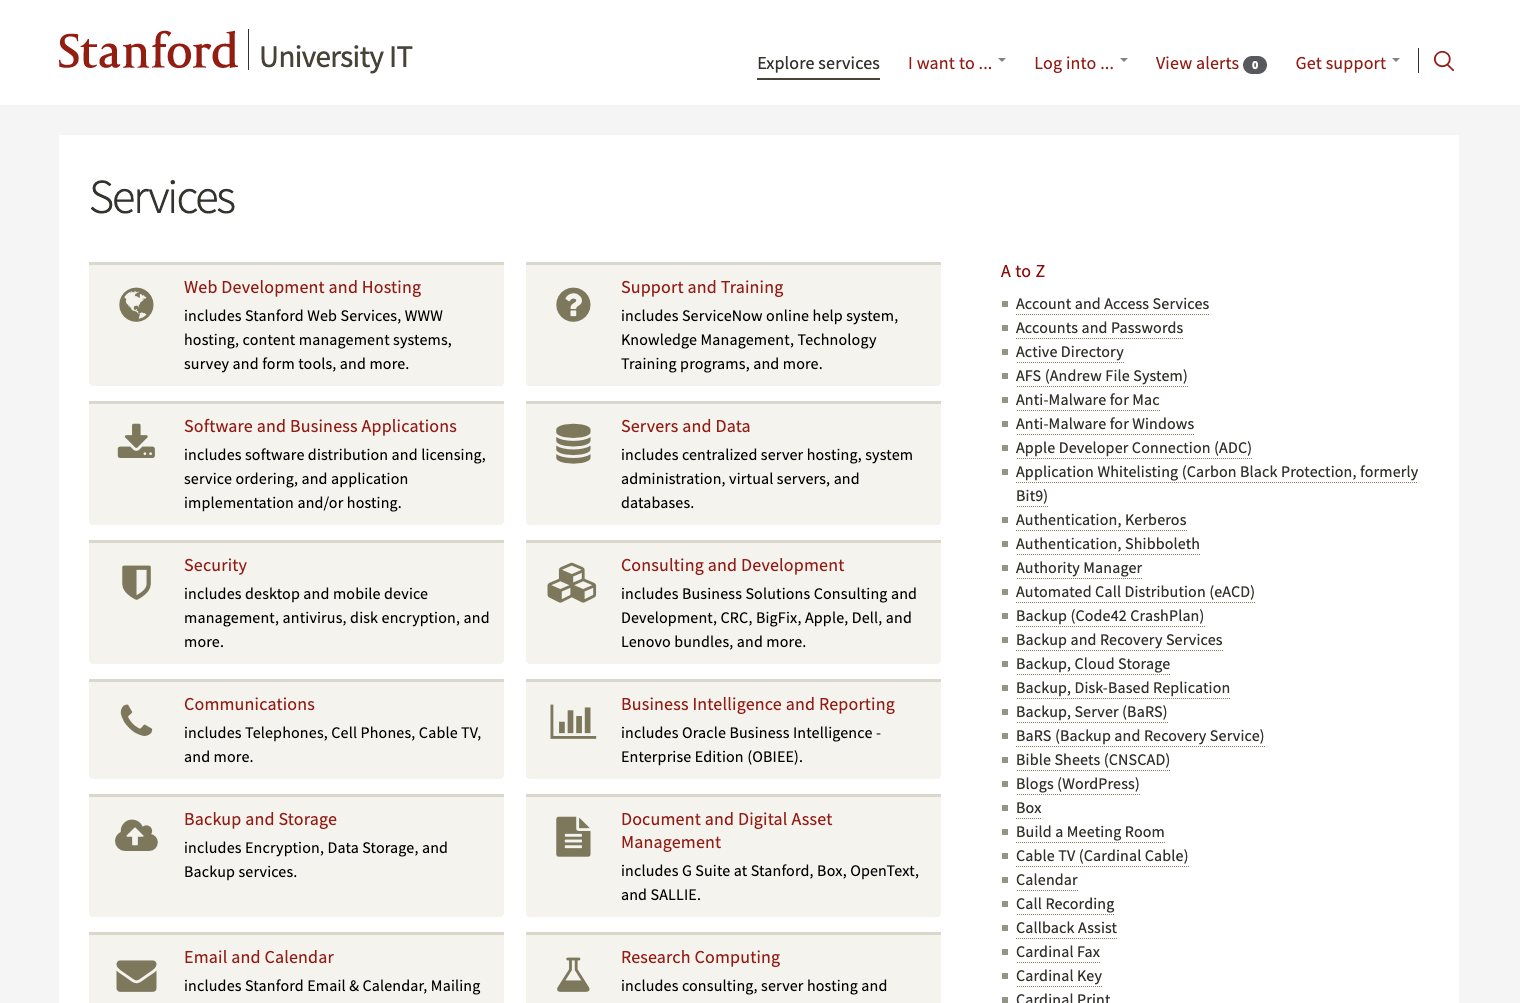 Service catalog of Stanford University